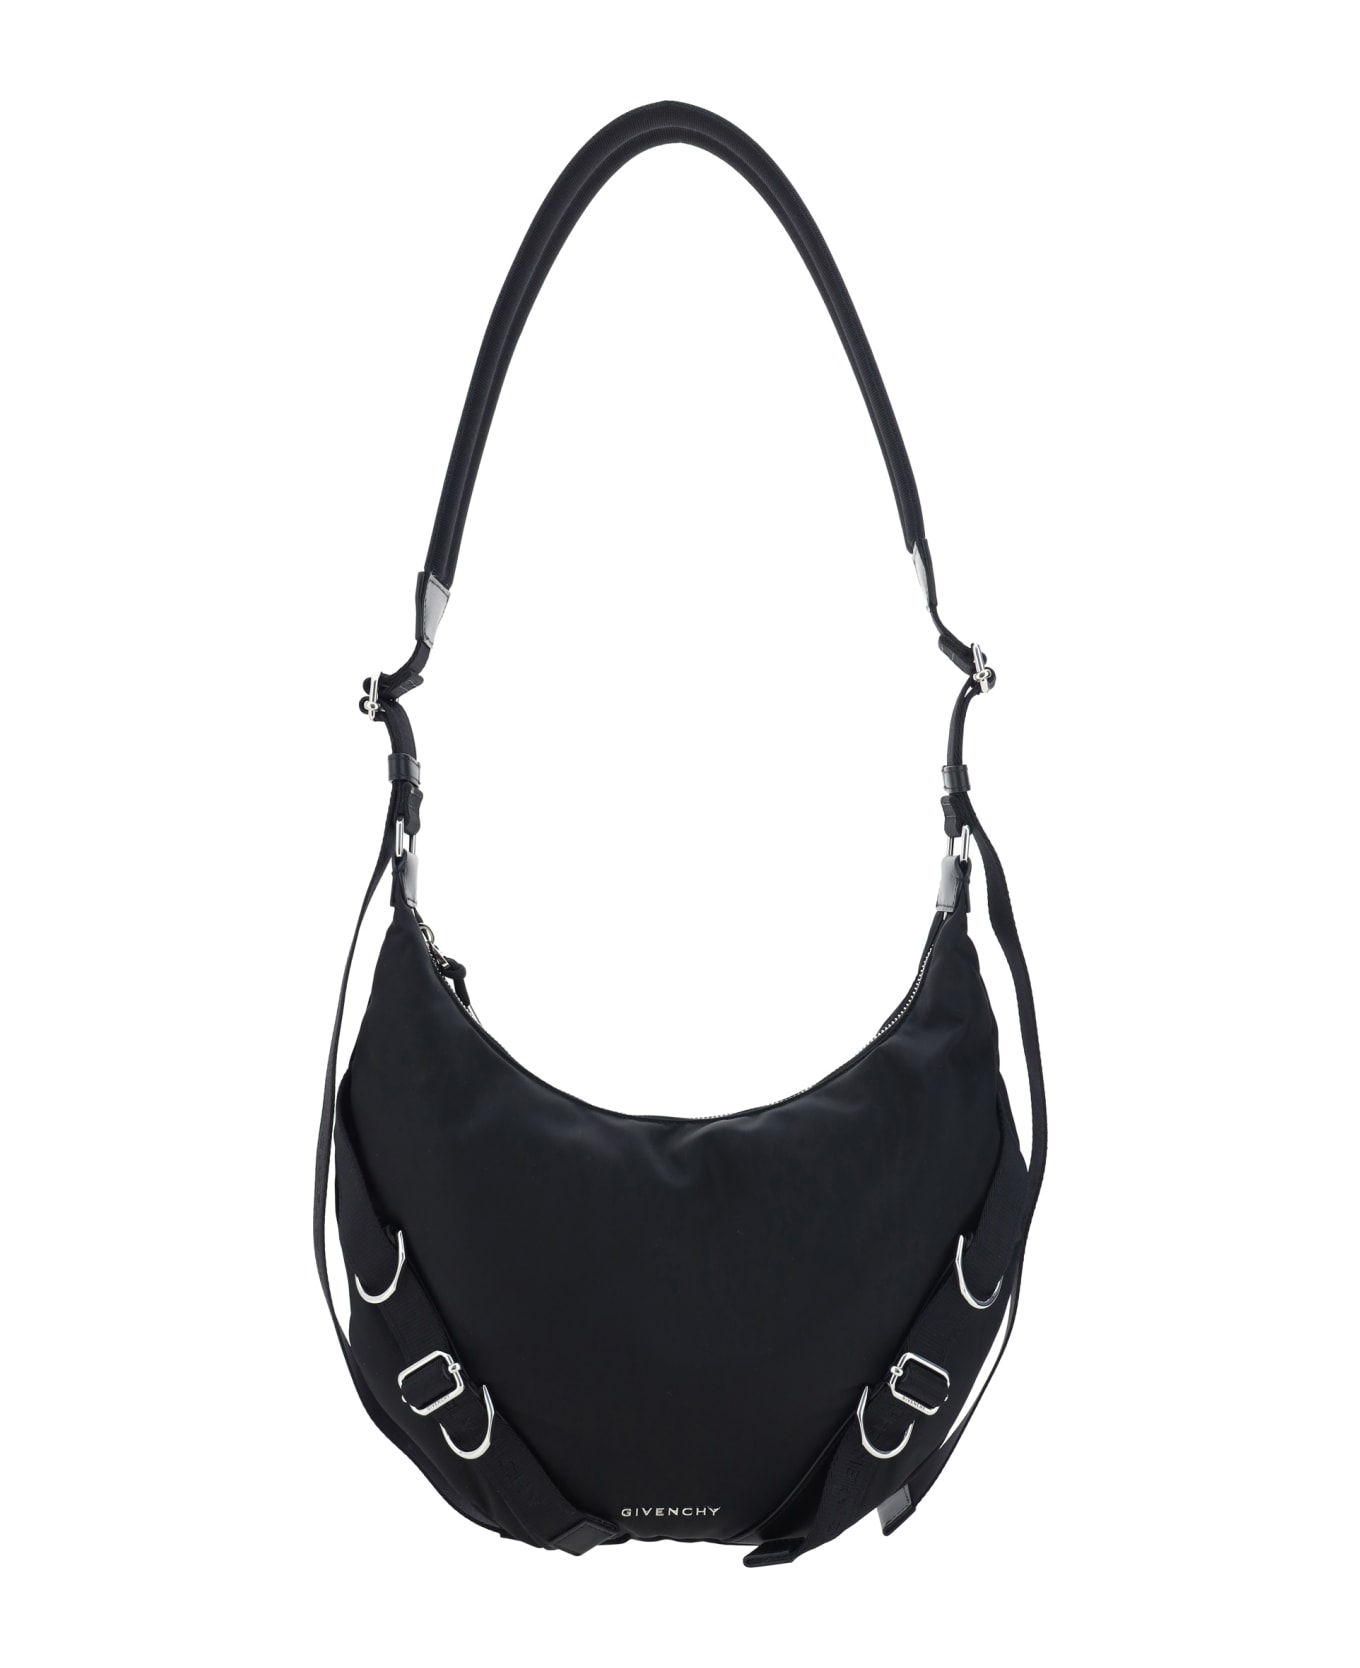 Givenchy Voyou Crossbody Bag - Black